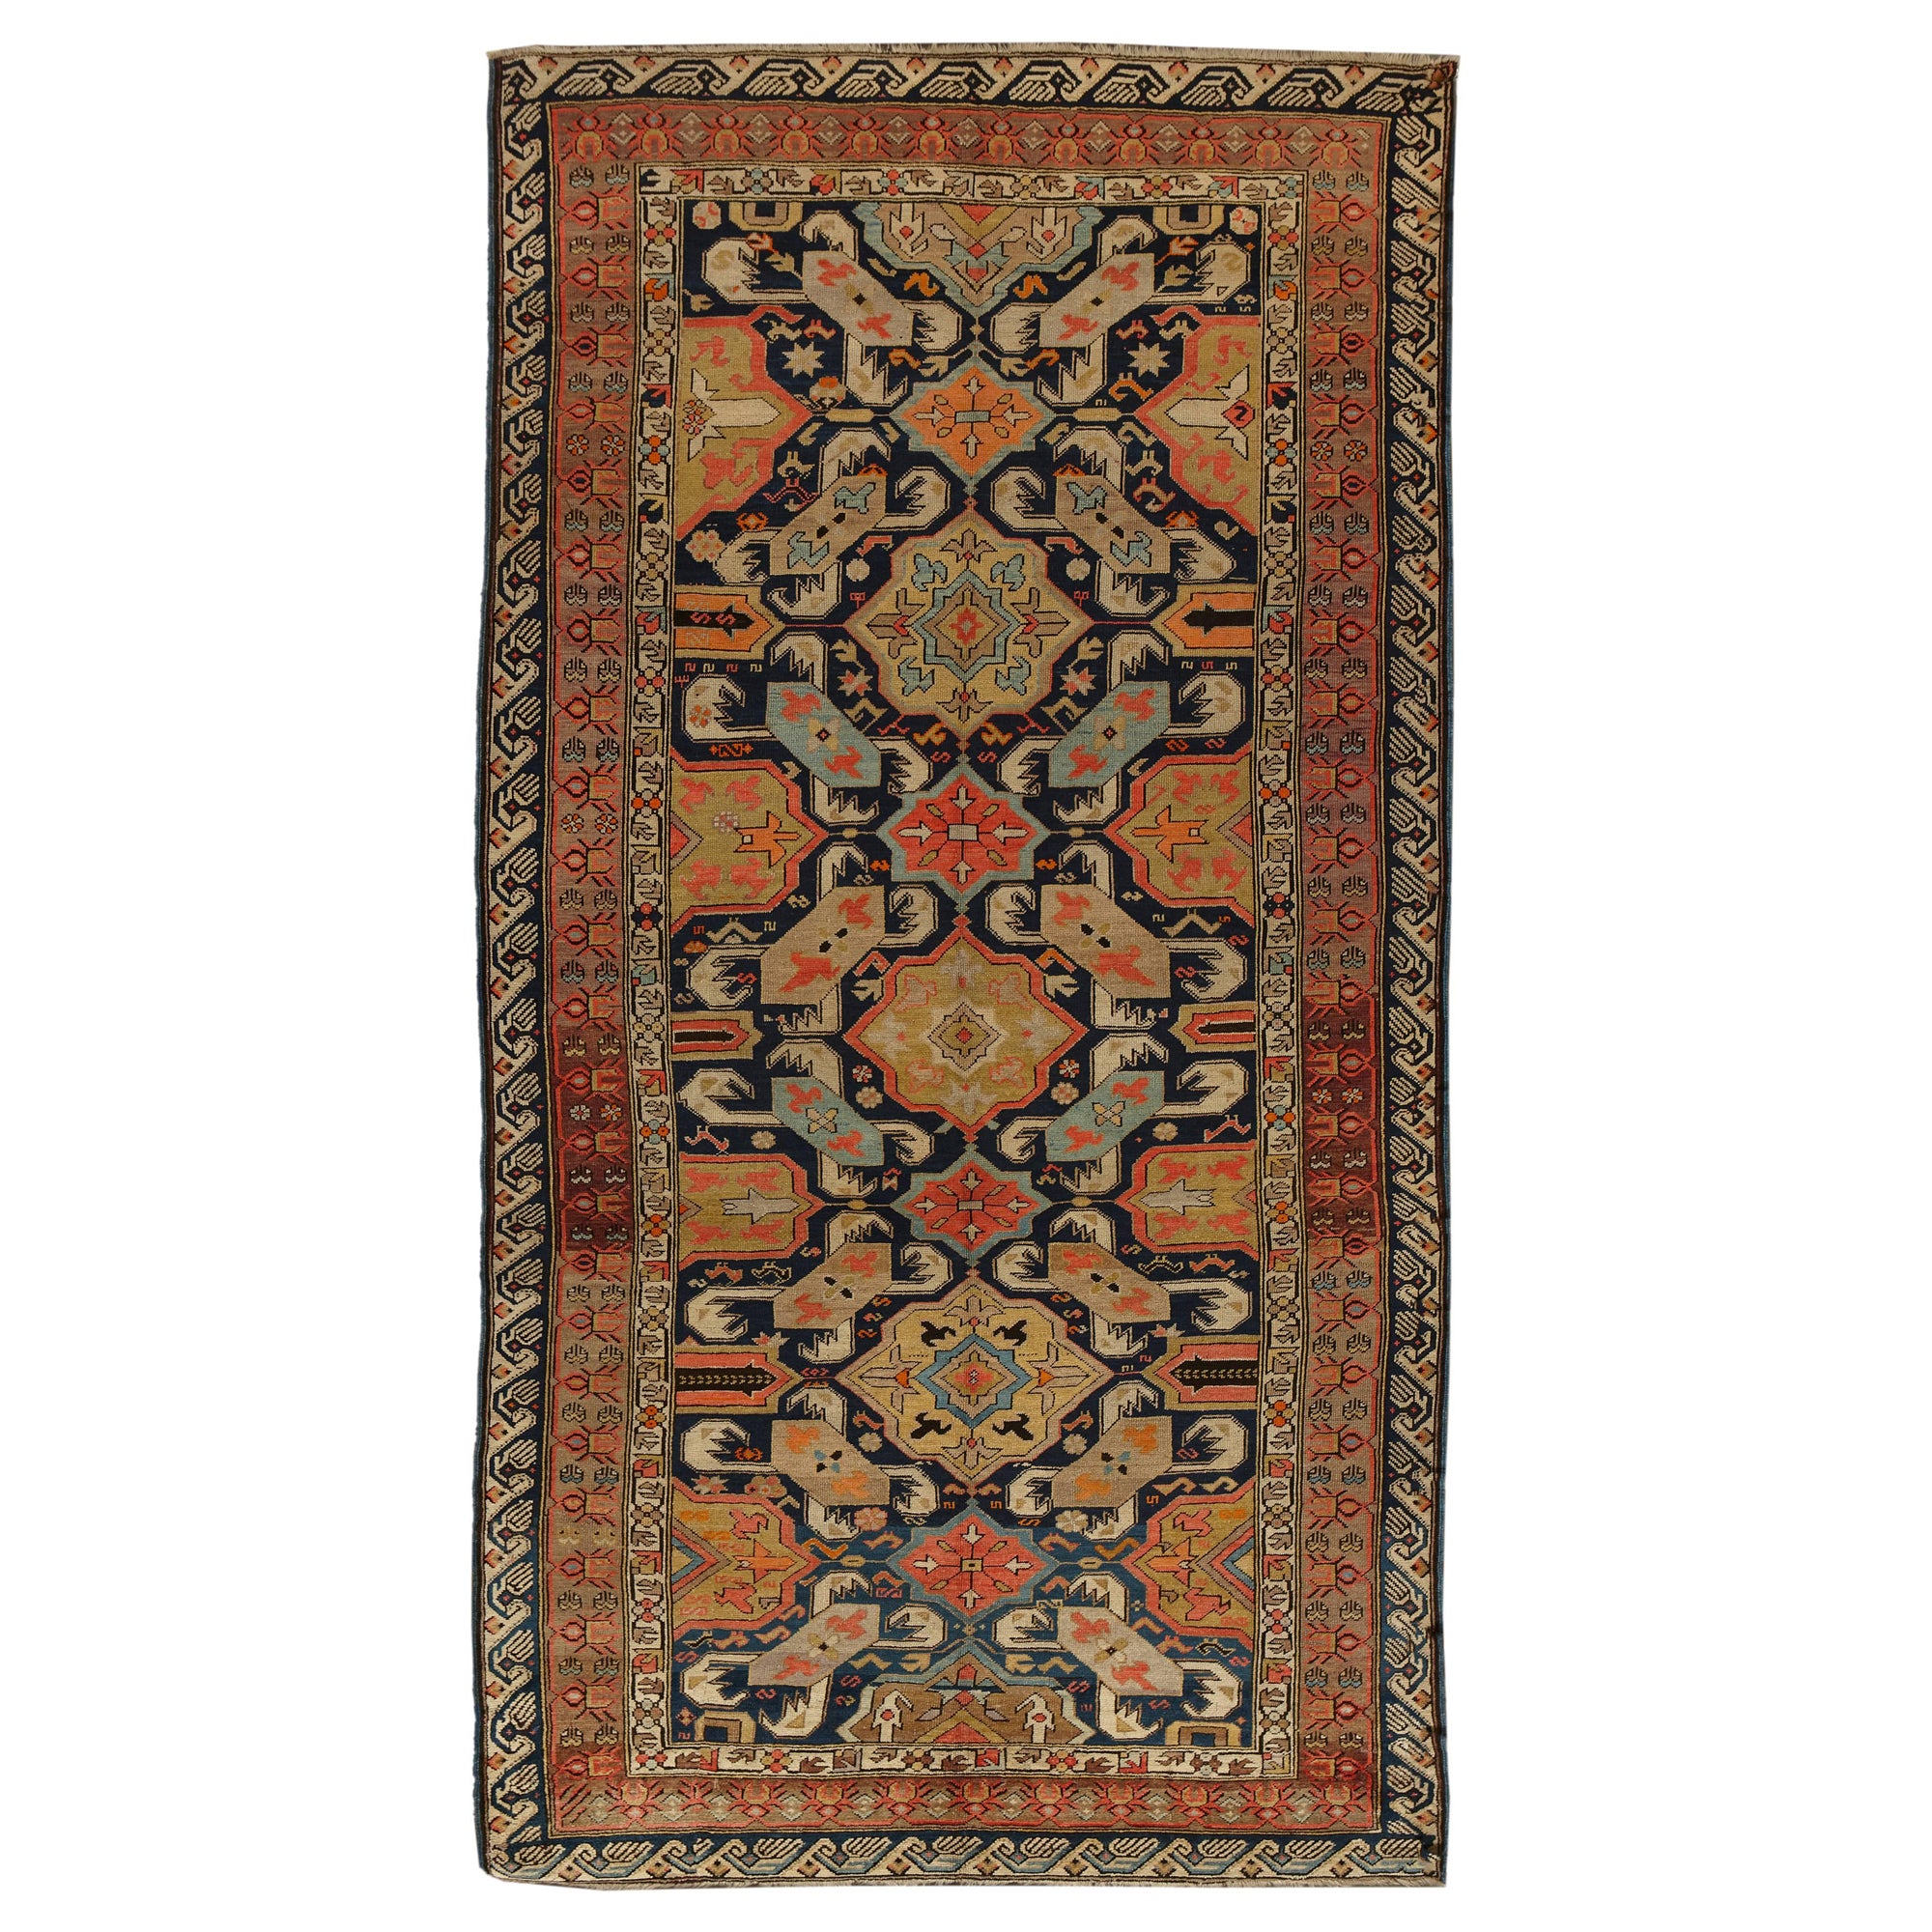 19th Century Rare Karabagh Gallery Carpet For Sale